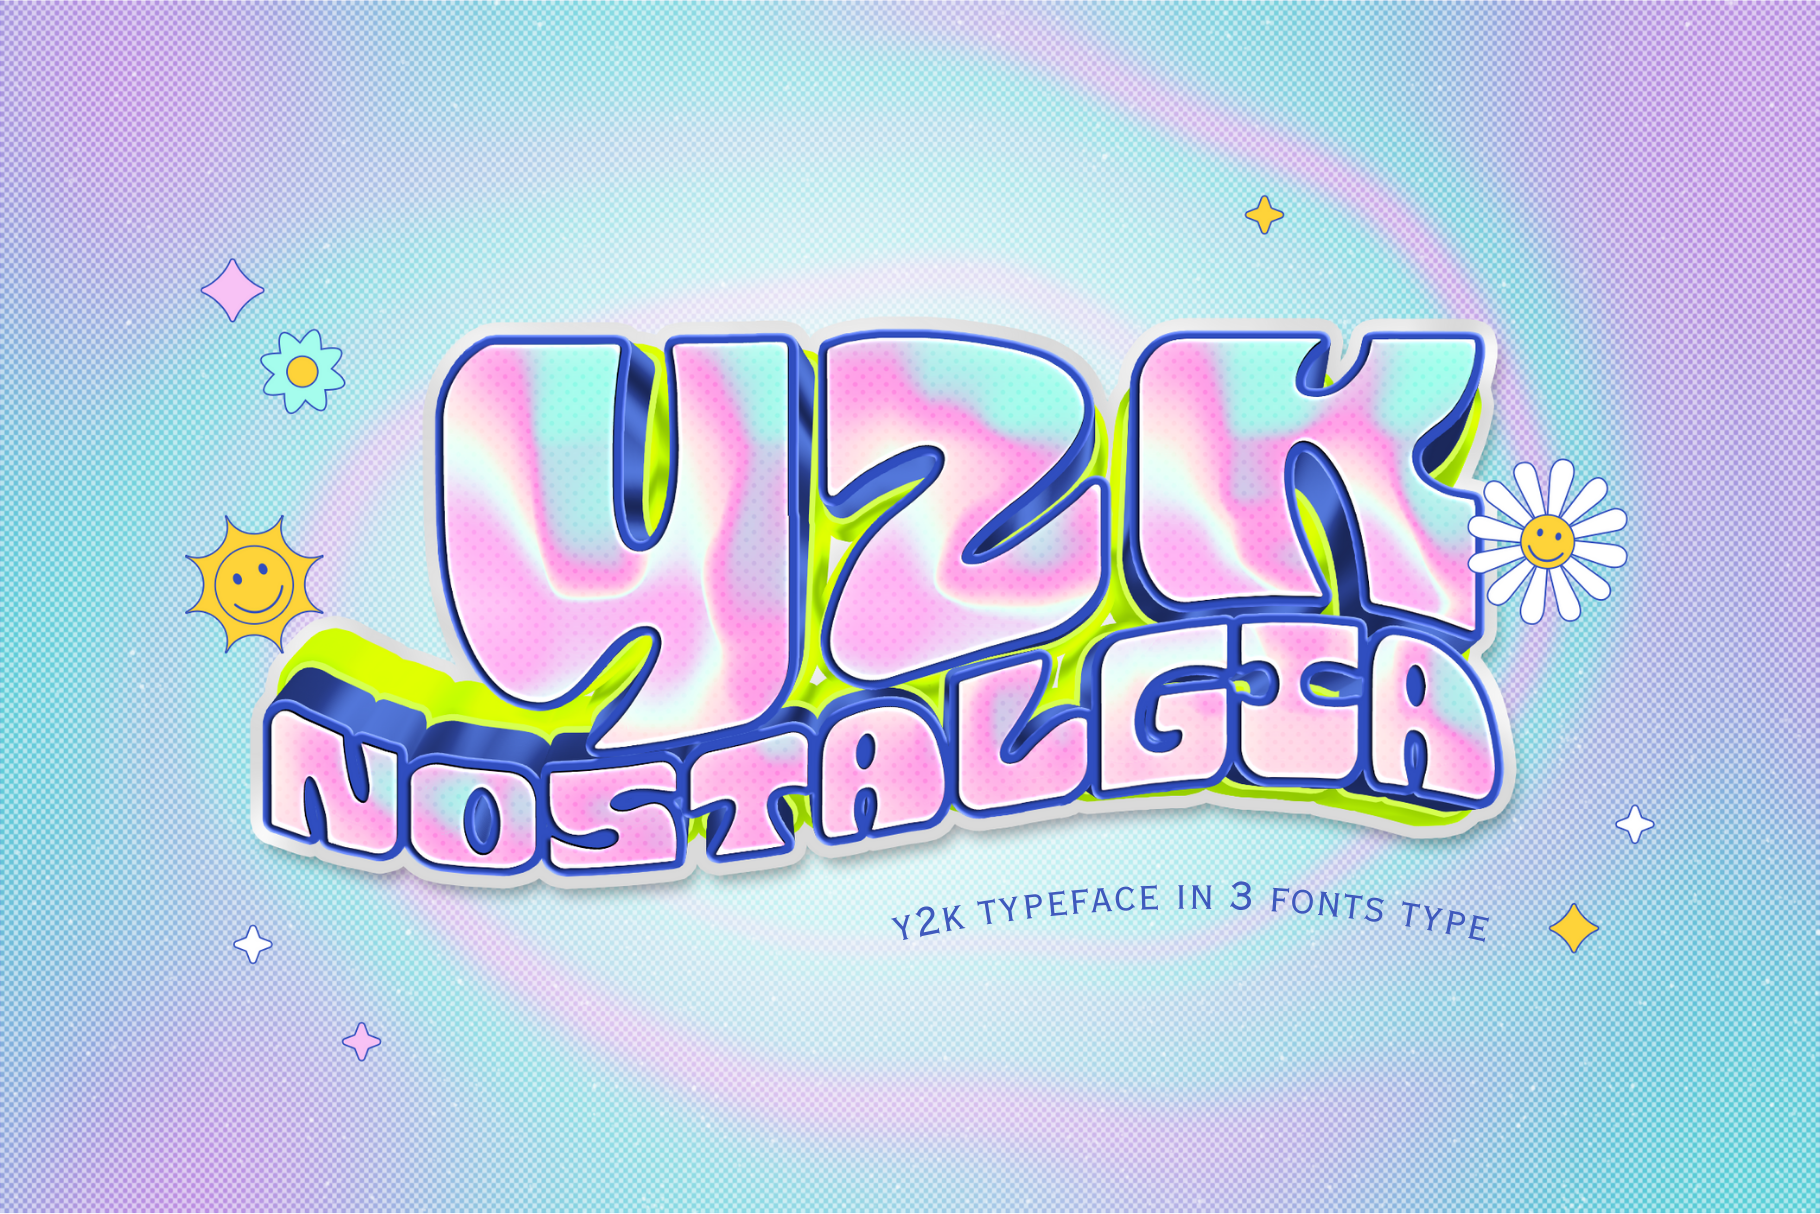 Y2K Nostalgia Font preview